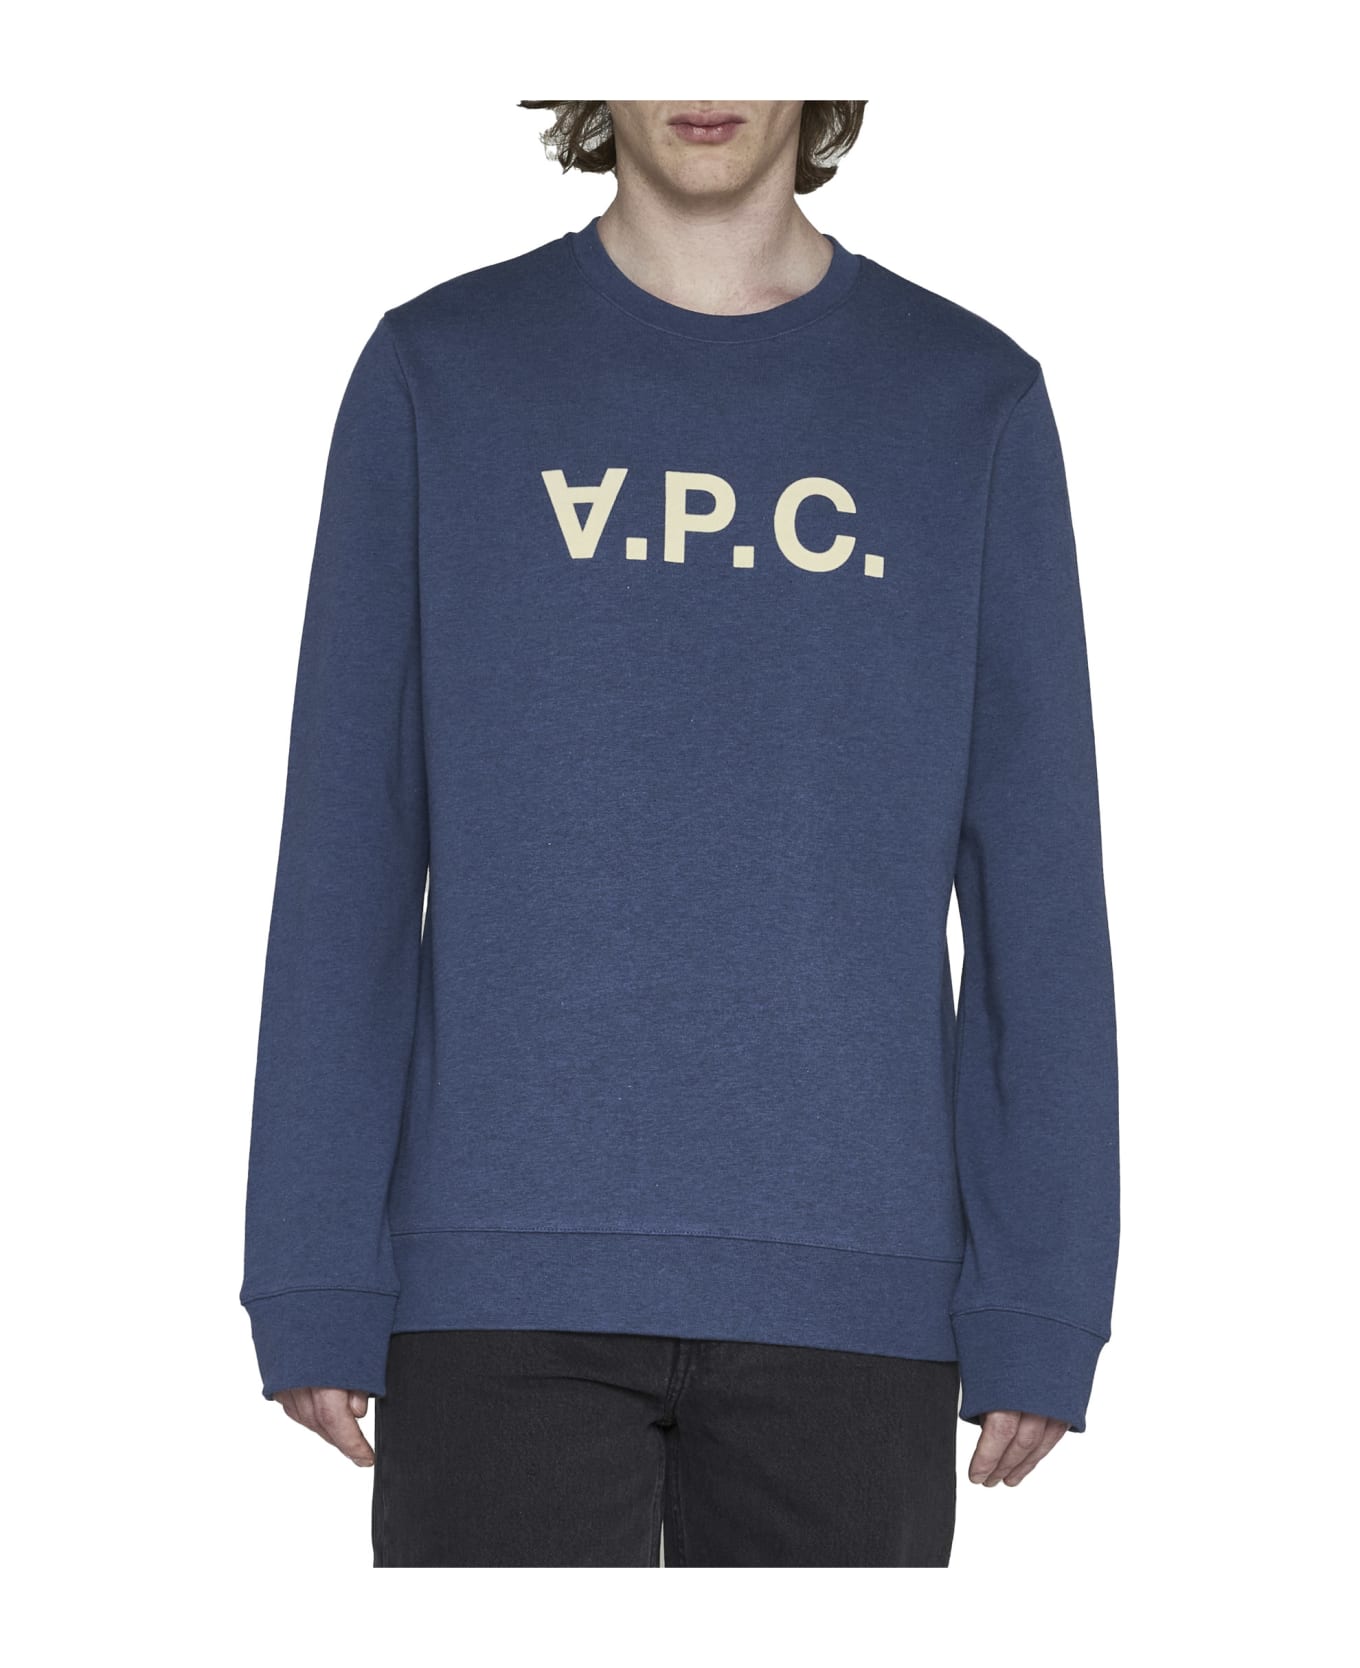 A.P.C. Apc Sweatshirt - Indigo